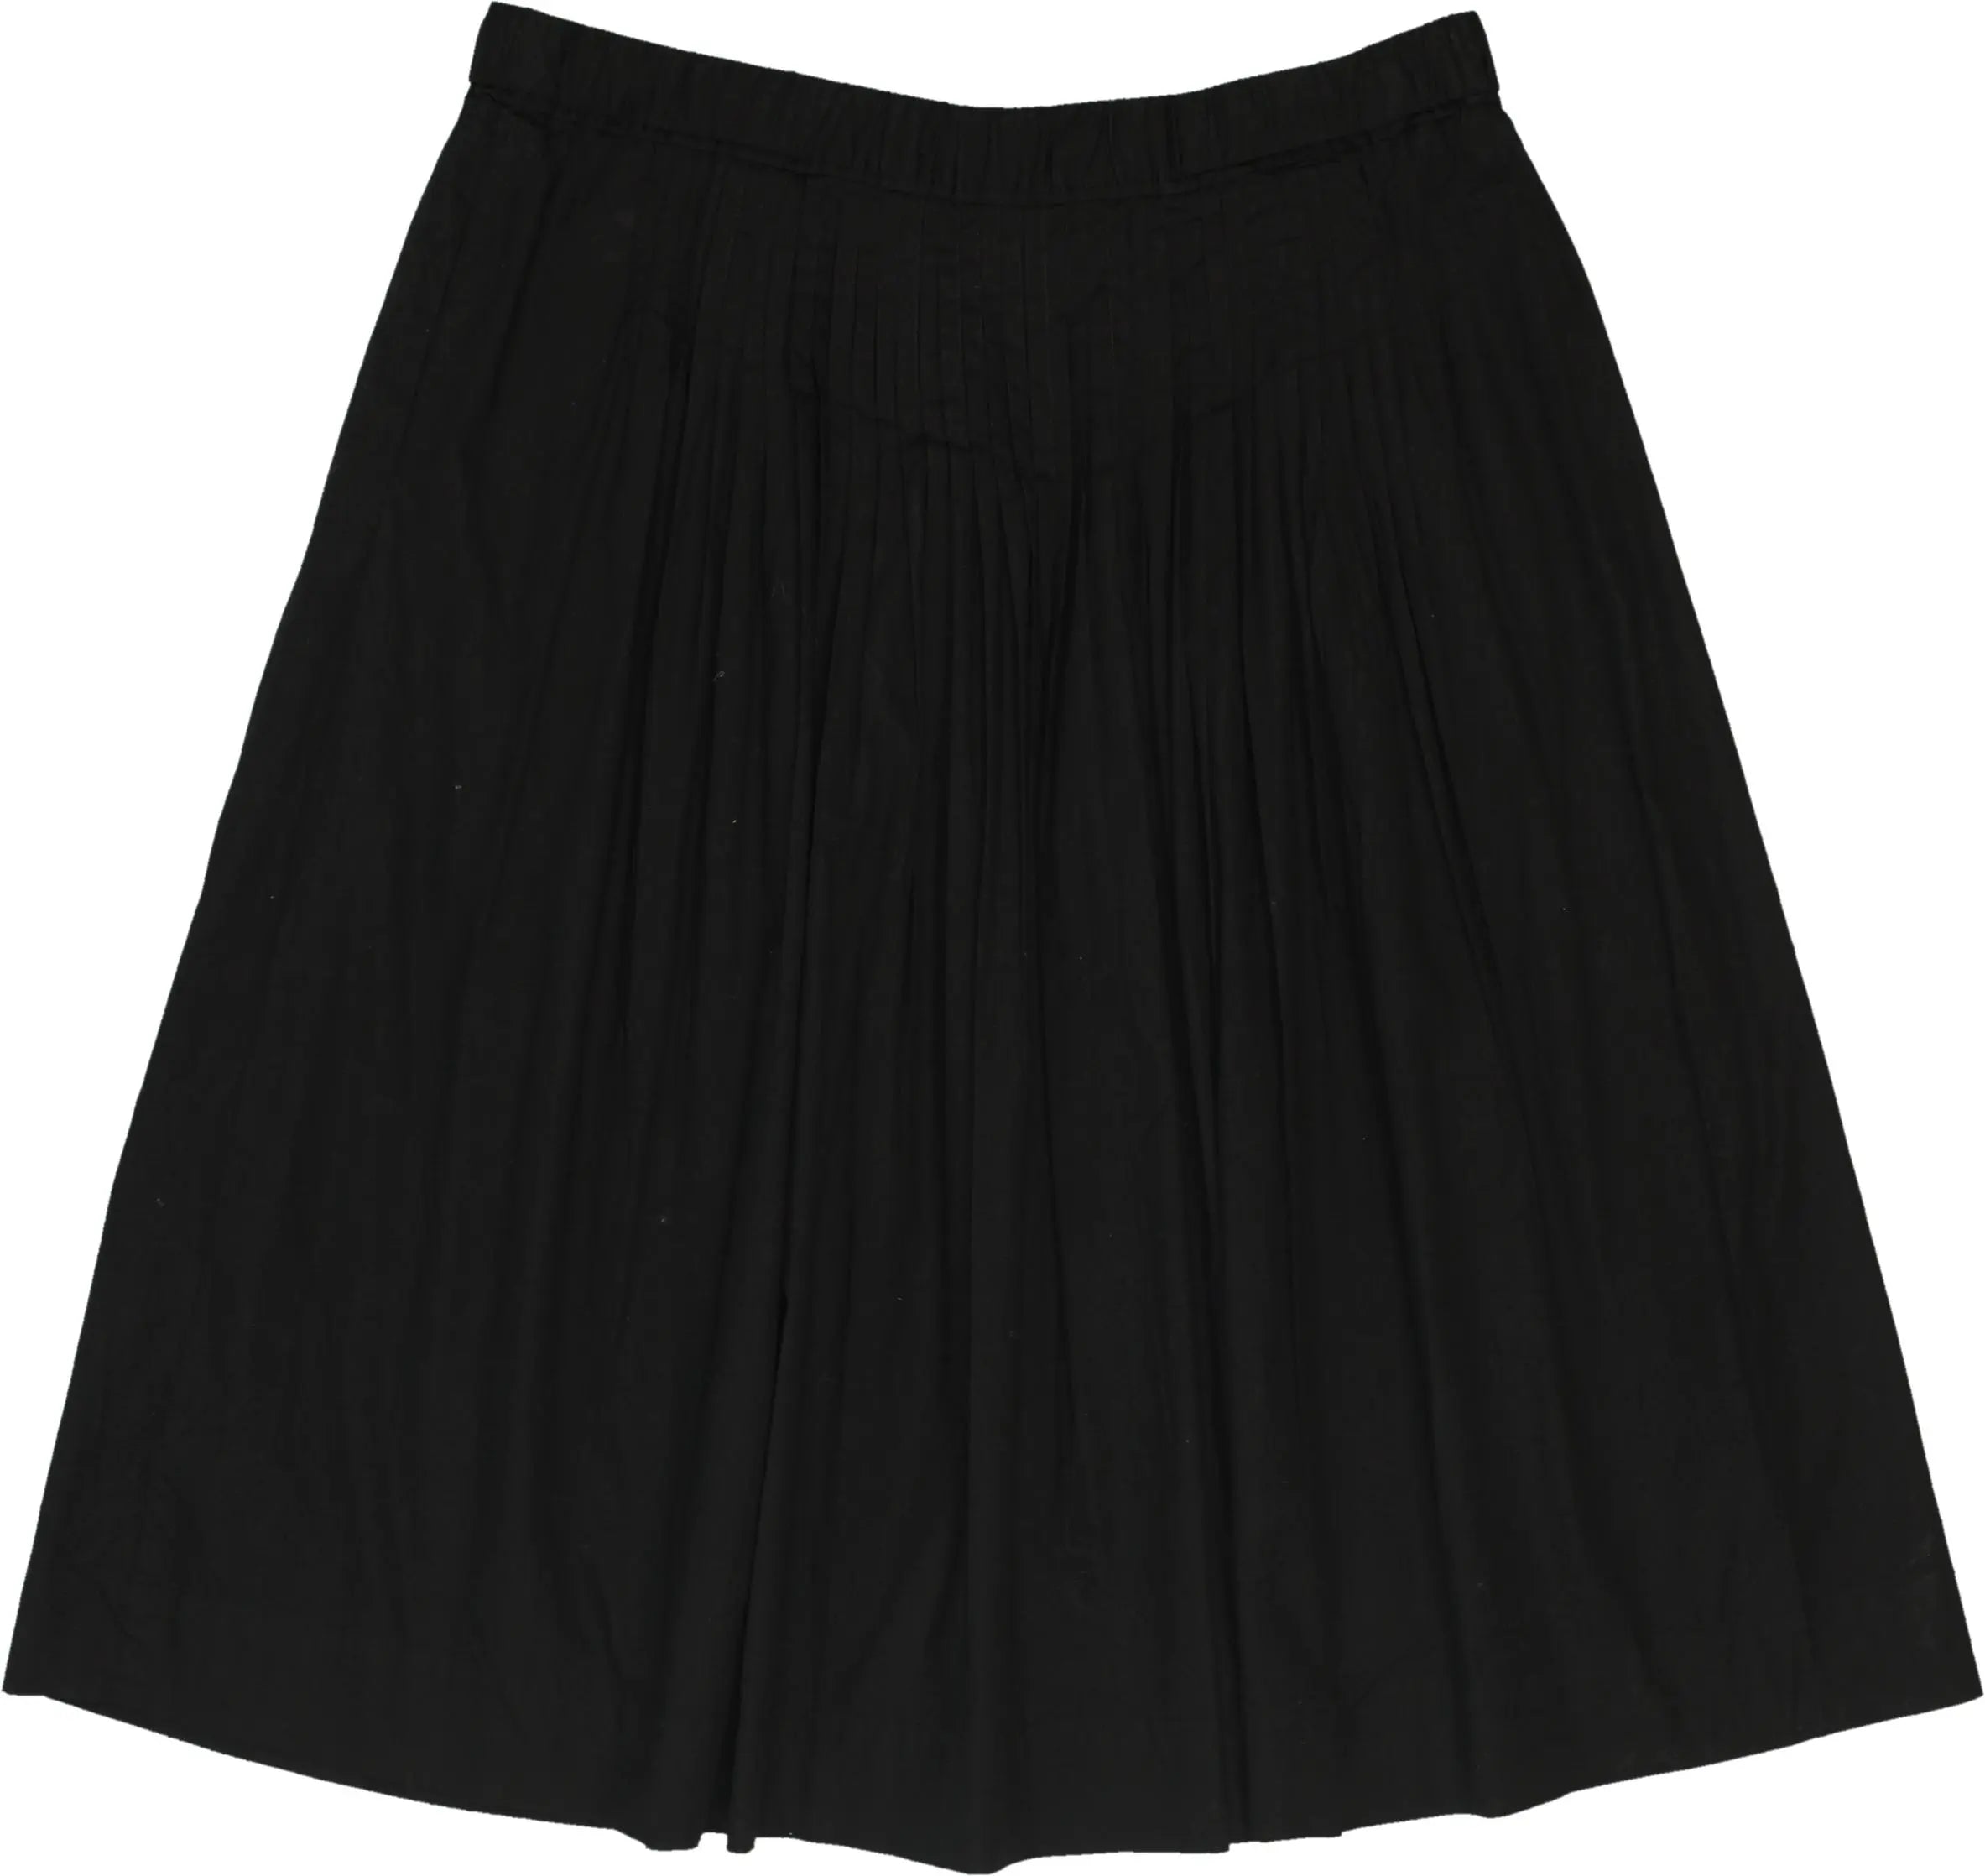 Joe Fresh - Black Pleated Skirt- ThriftTale.com - Vintage and second handclothing